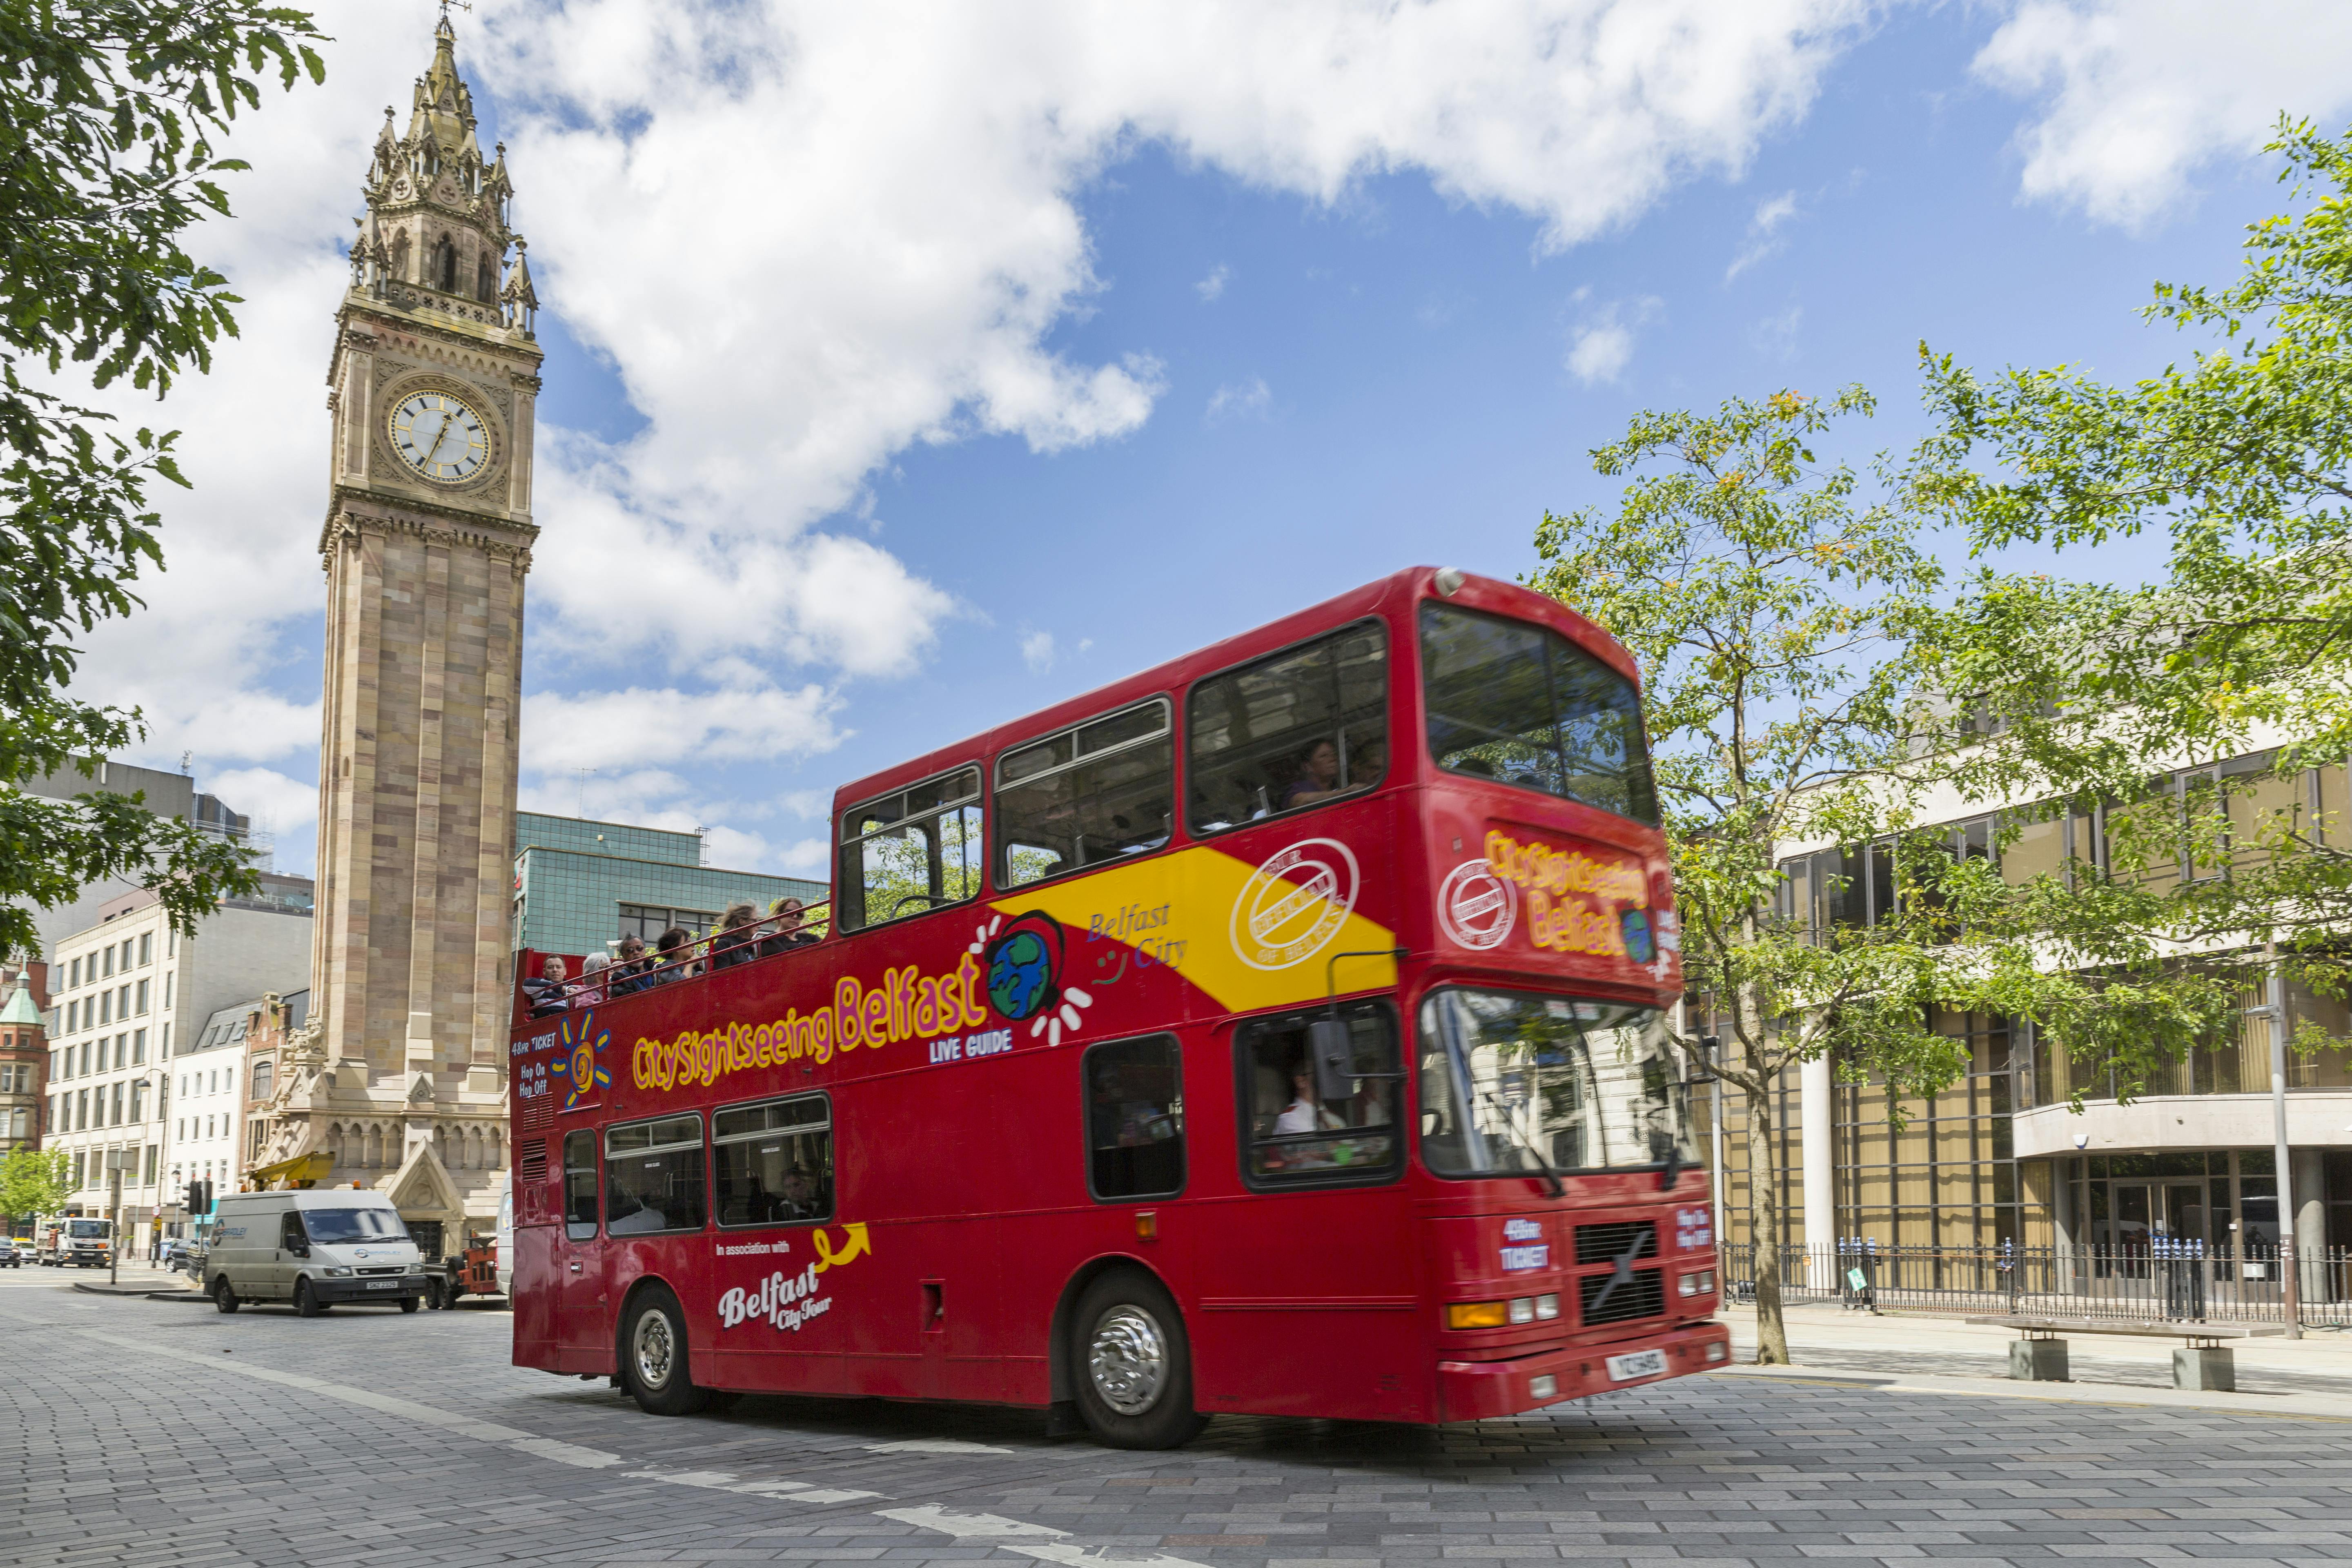 Tour en autobús turístico City Sightseeing por Belfast